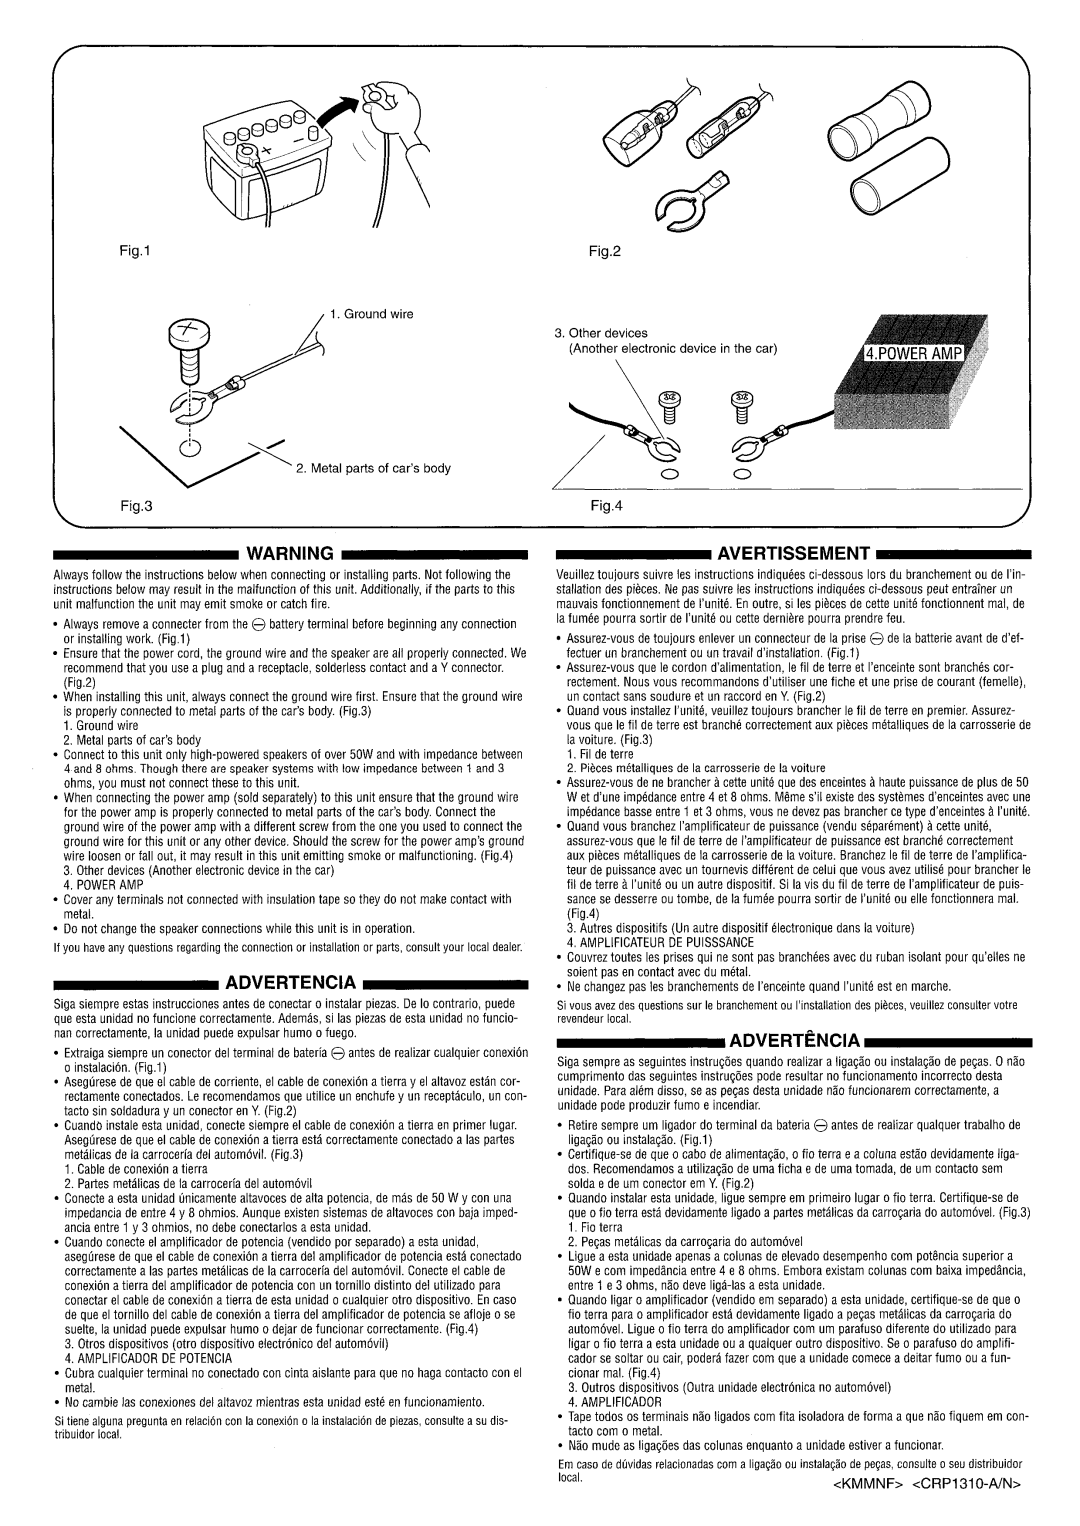 Sirius Satellite Radio DEH-P6700MP operation manual 